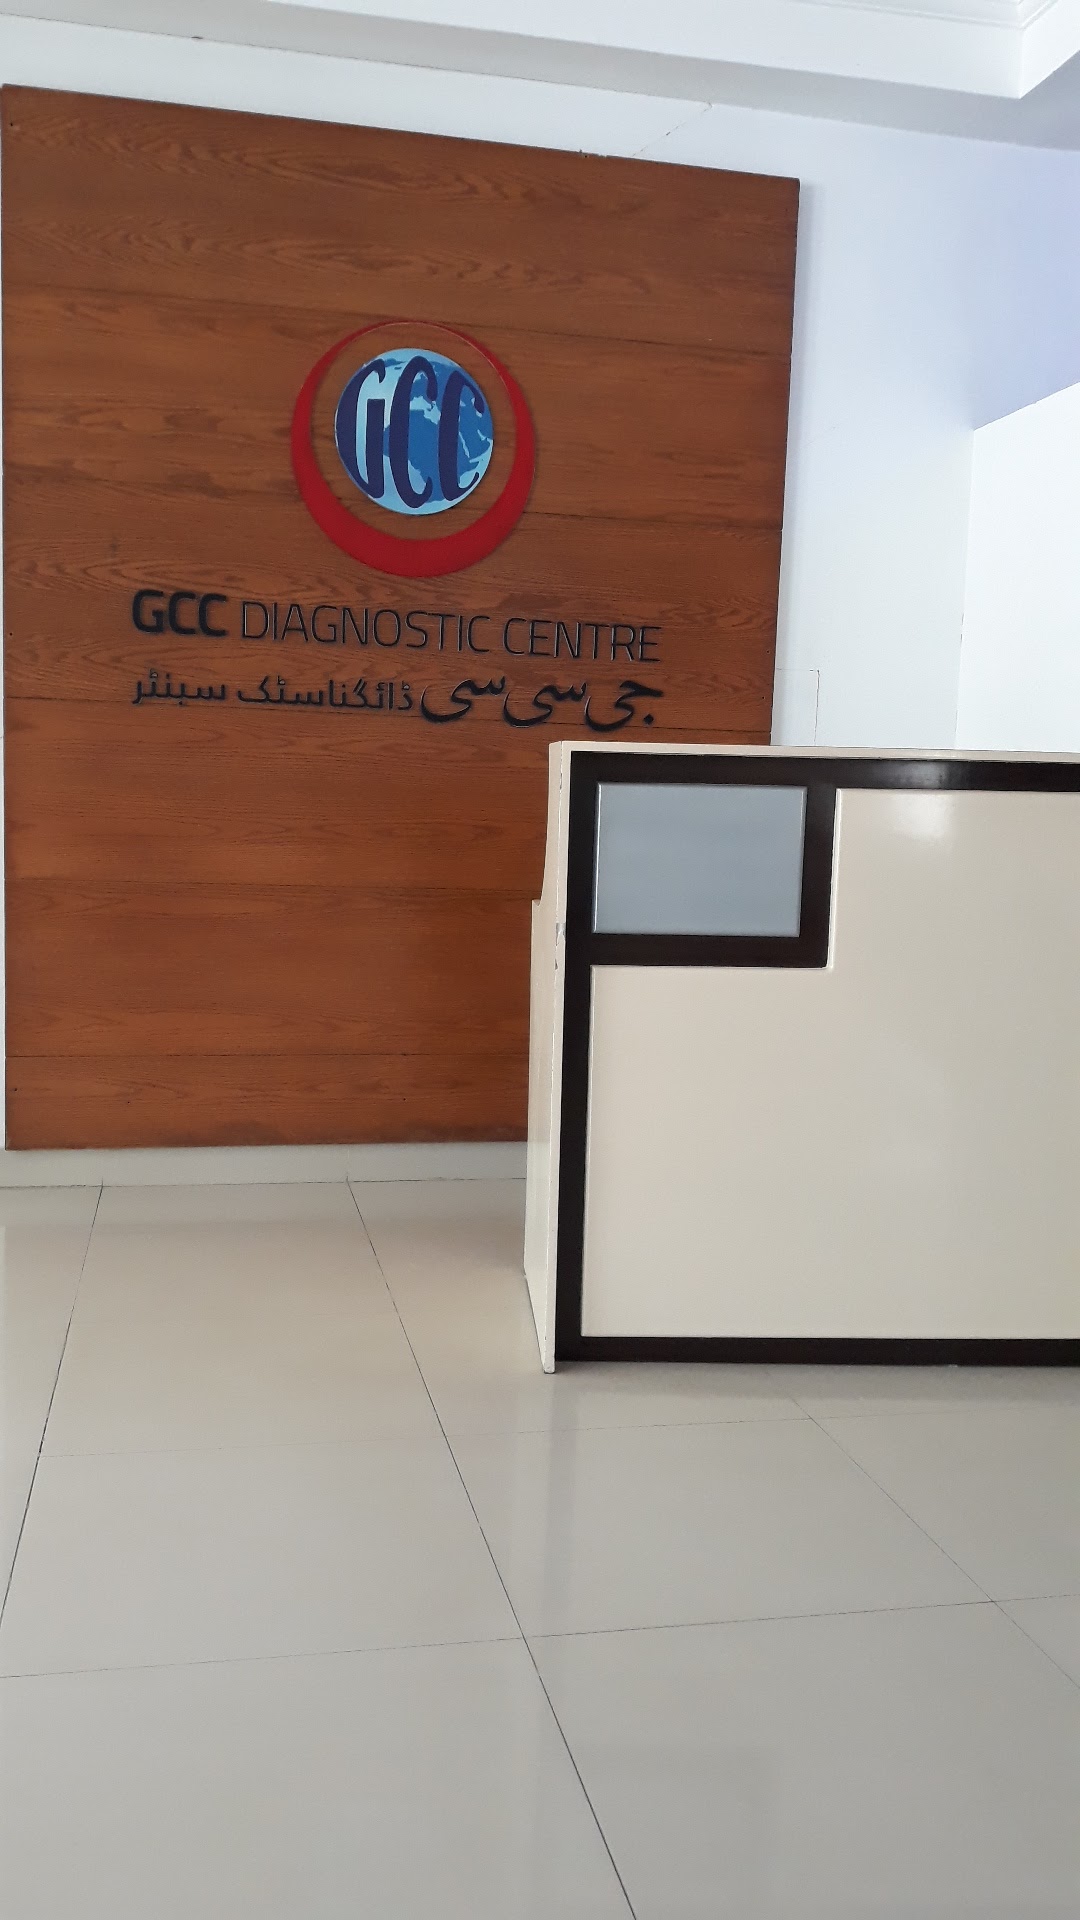 GCC Diagnostic Center